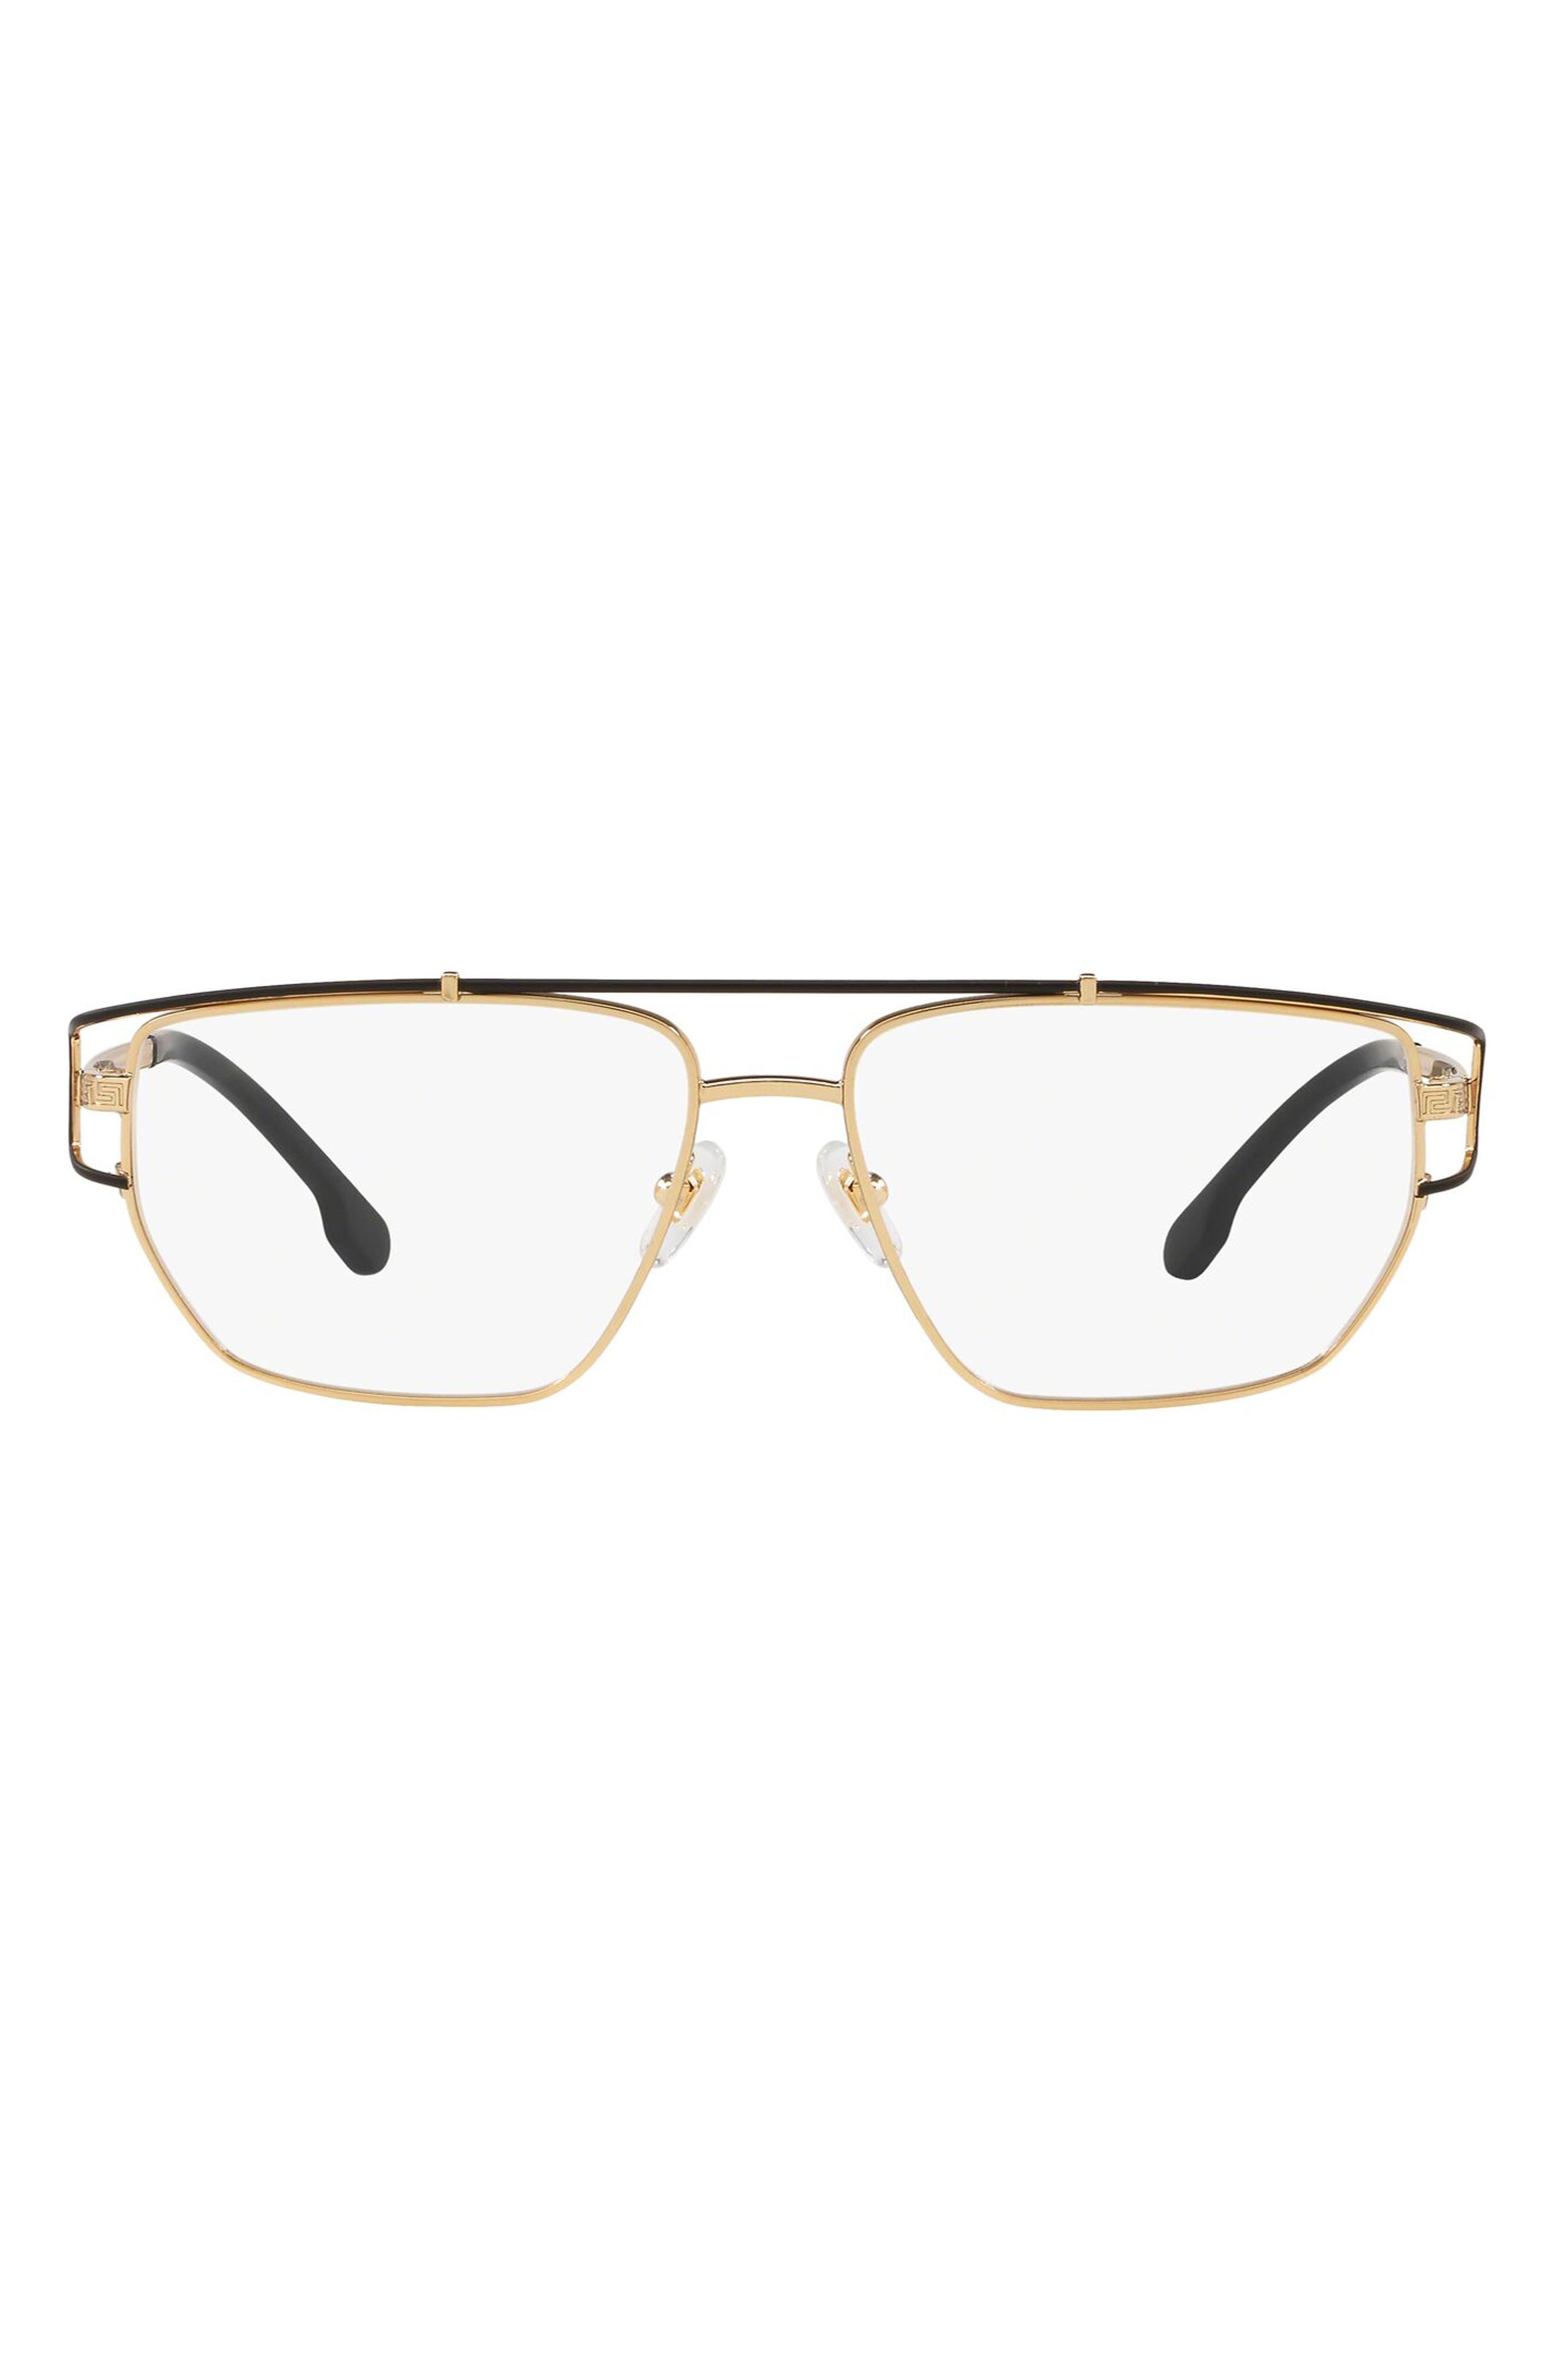 VERSACE 55mm Rectangular Optical Glasses in Gold